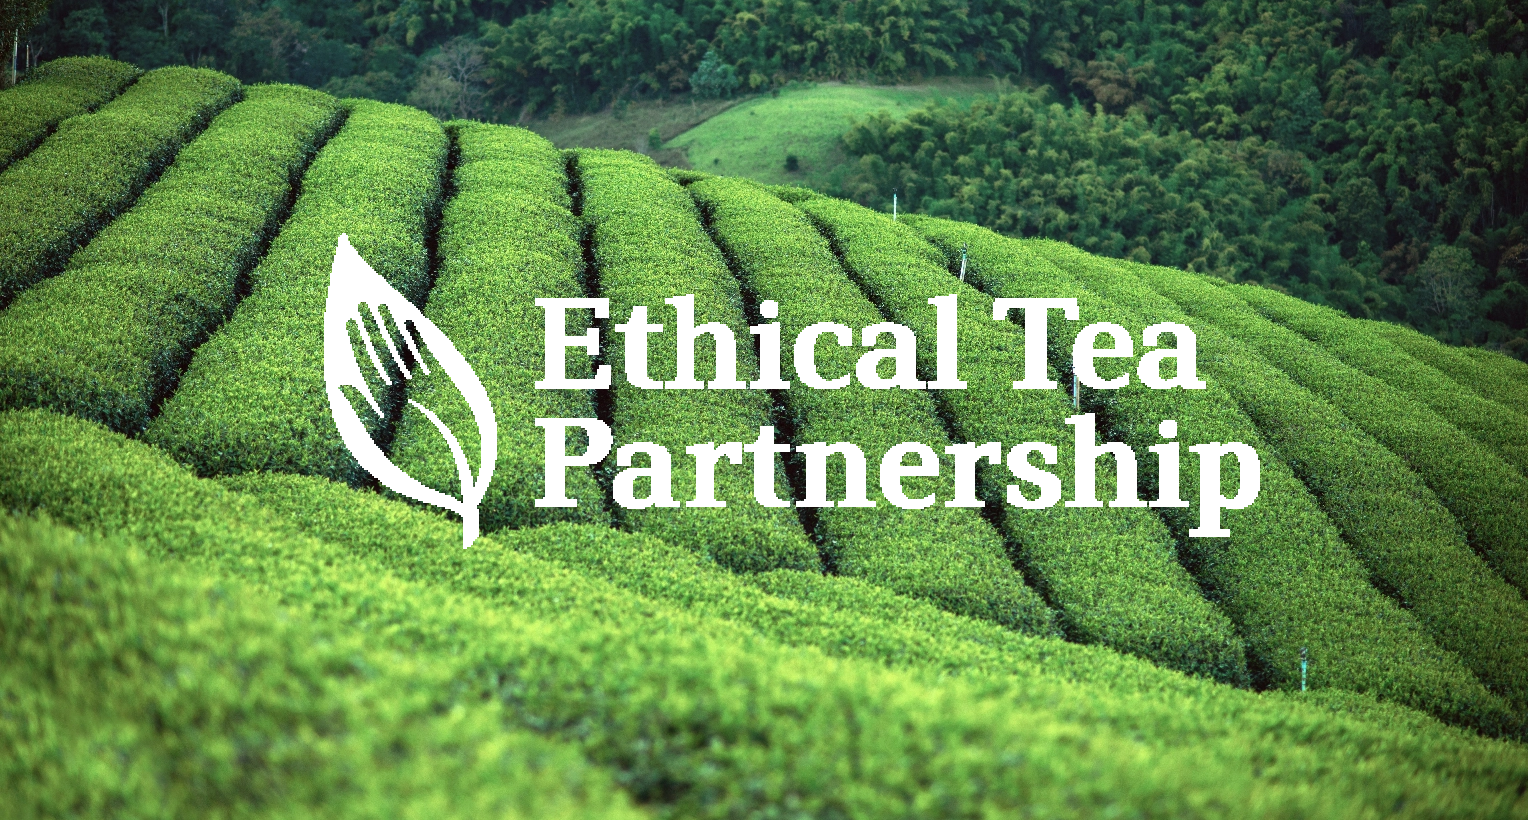 The Ethical Tea Partnership